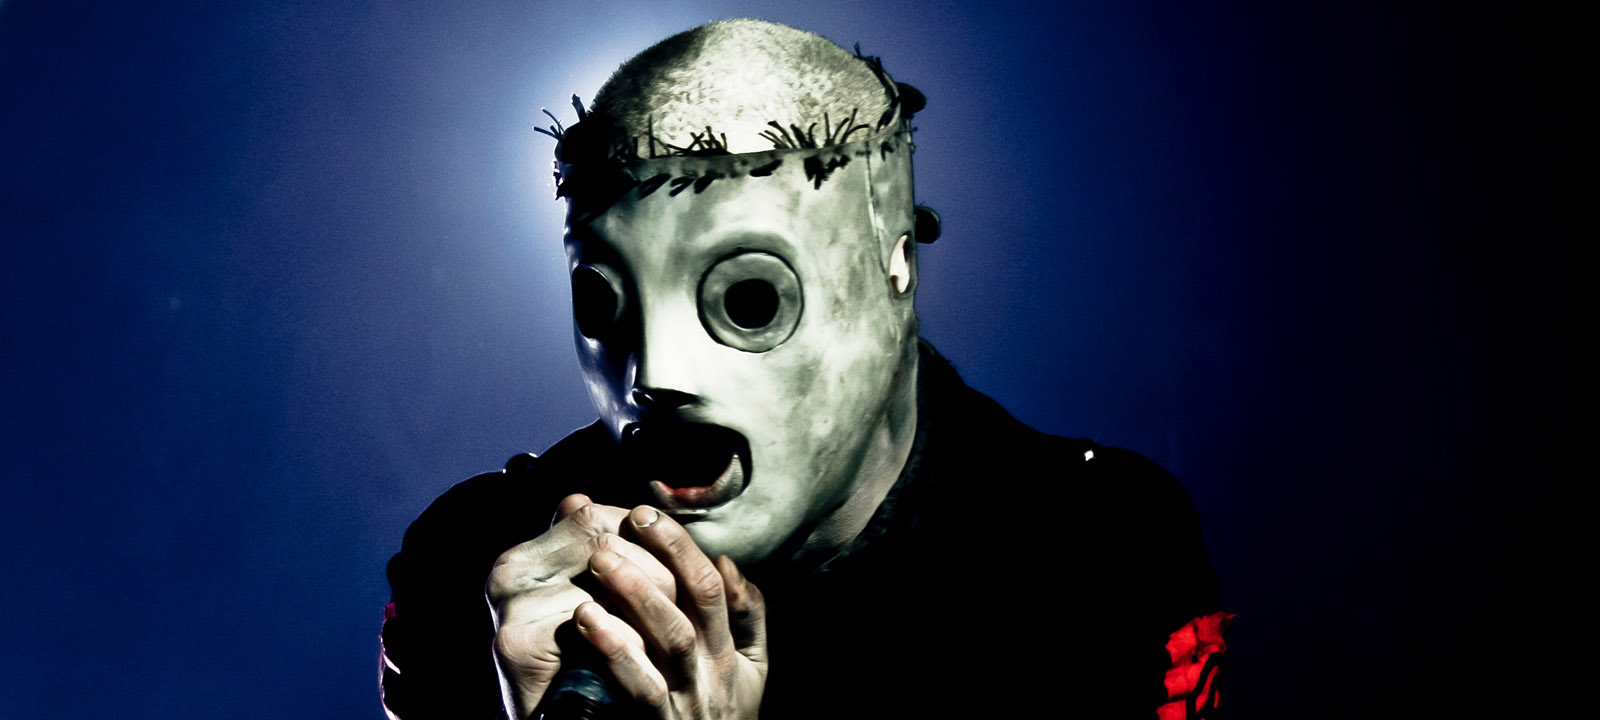 Vokalis Slipknot Tunjukan Sisi Terbarunya, Apa Ya? thumbnail